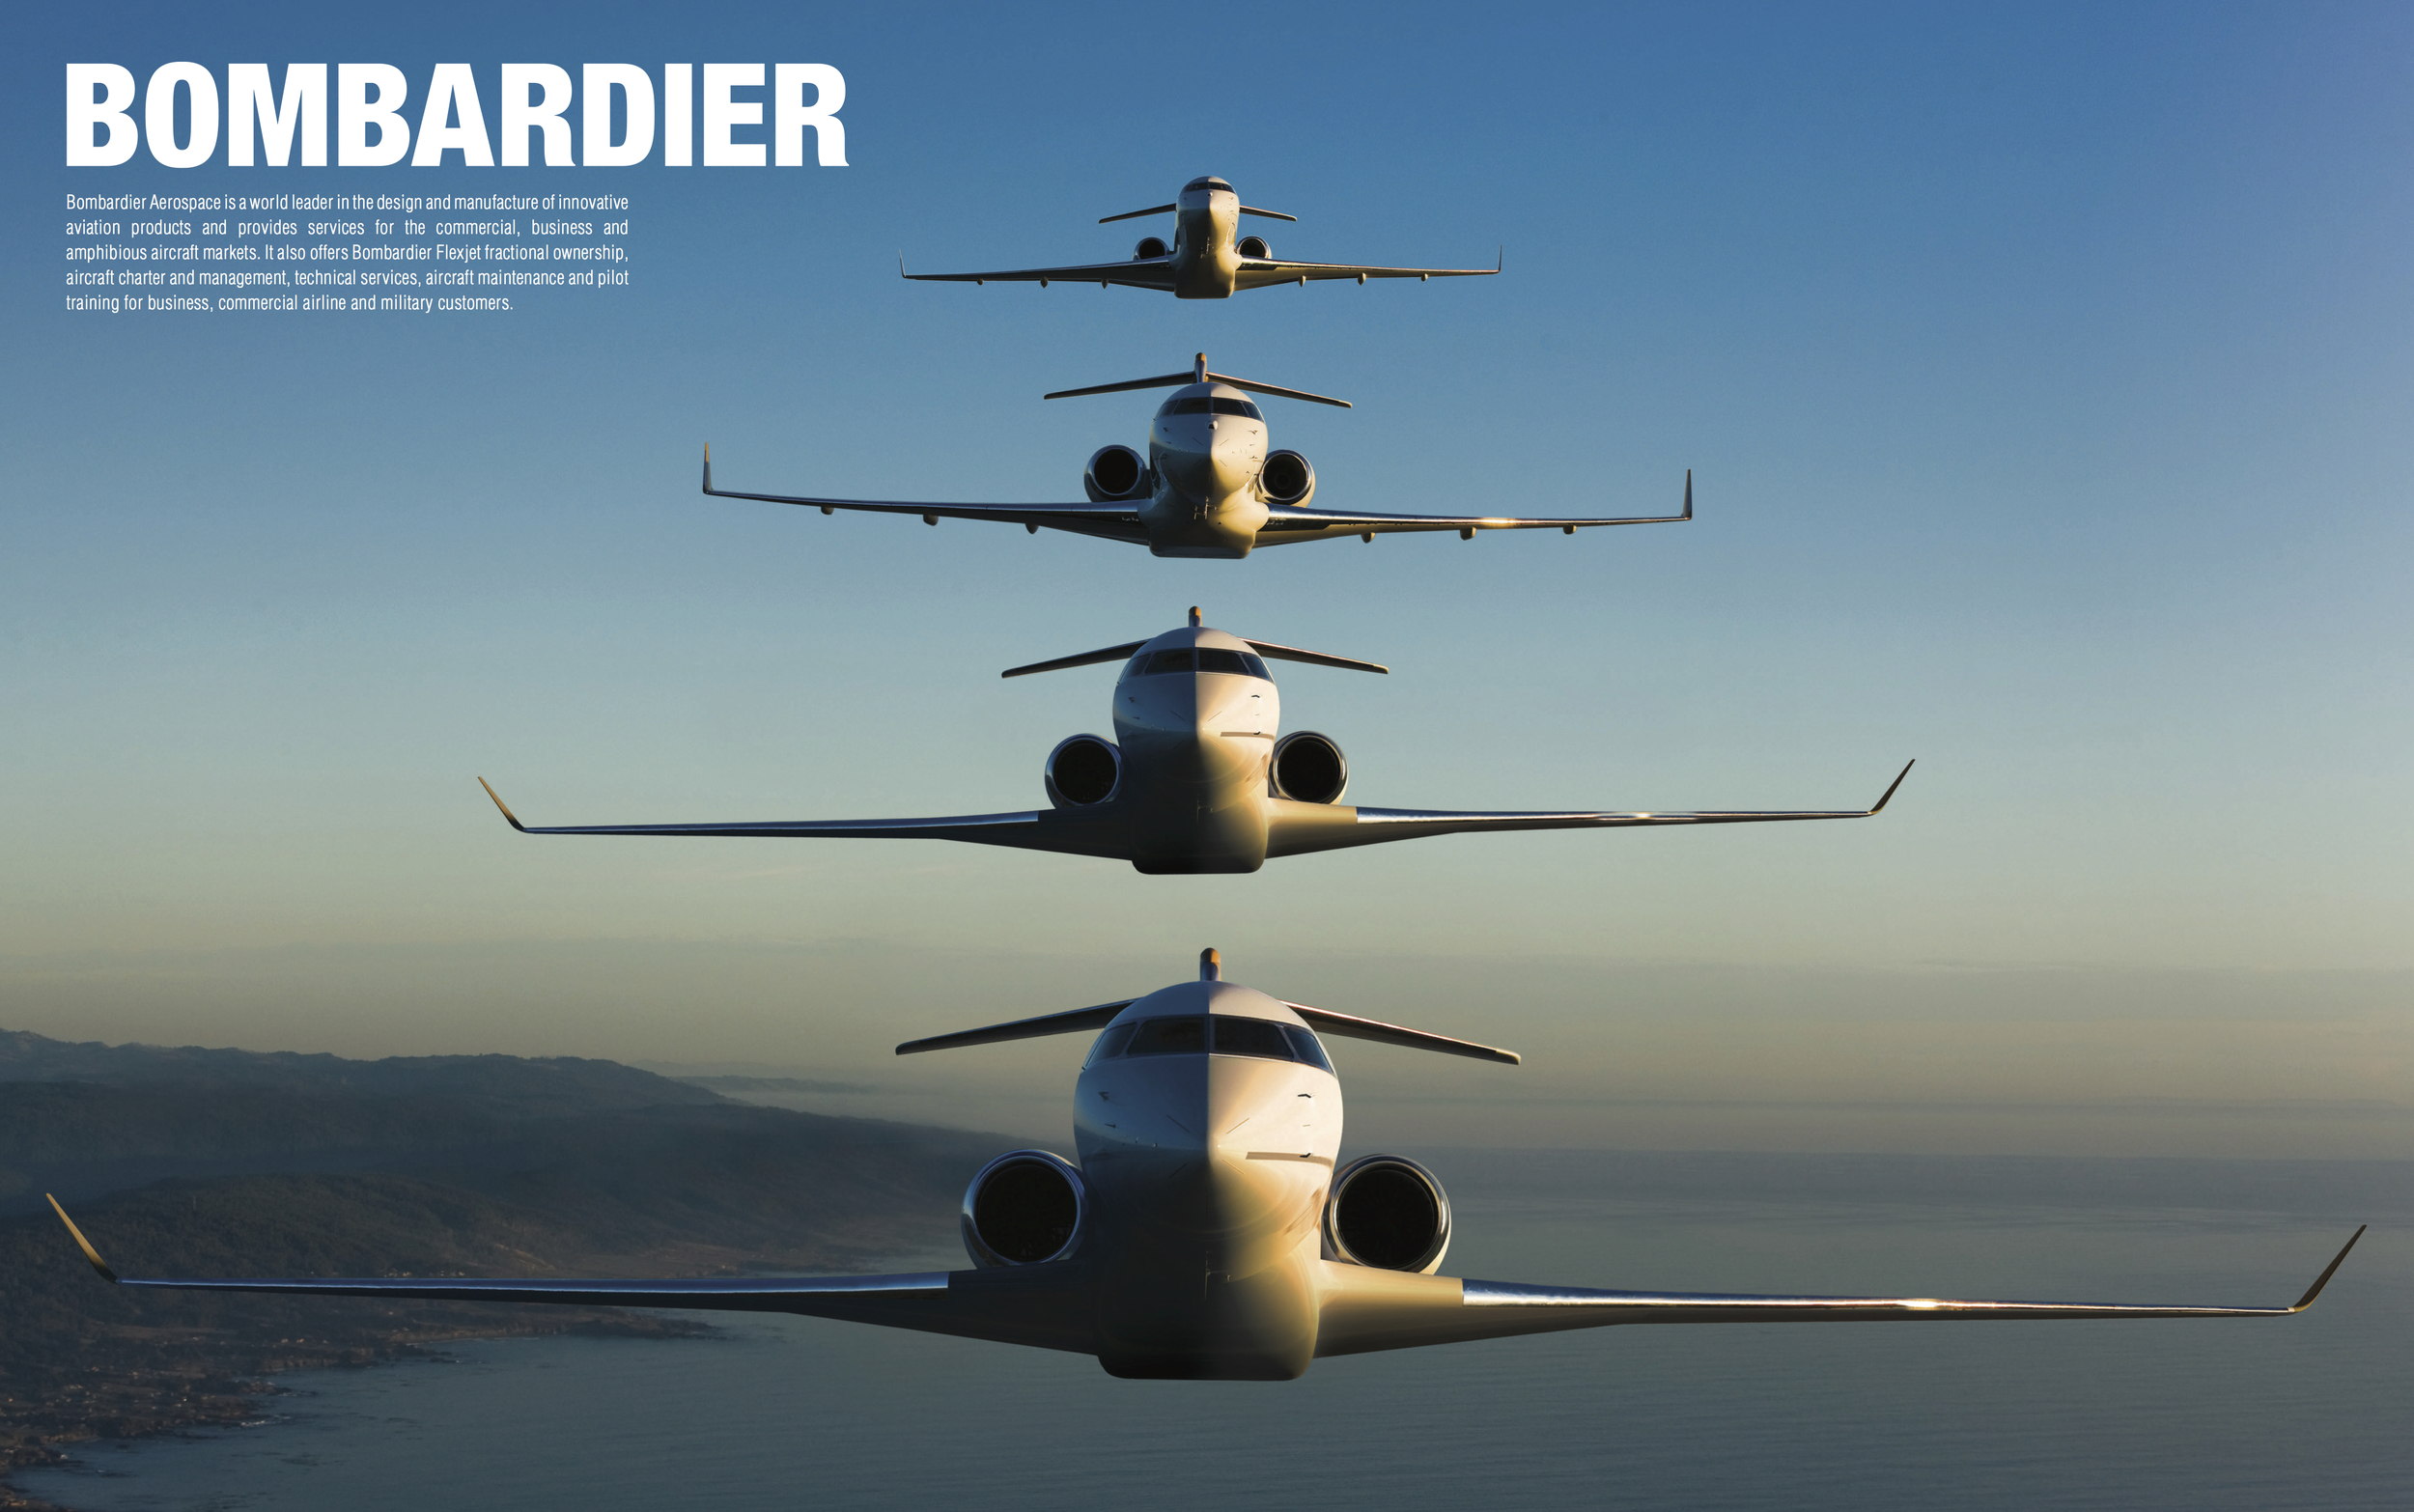 Final Bombardier AR.jpg